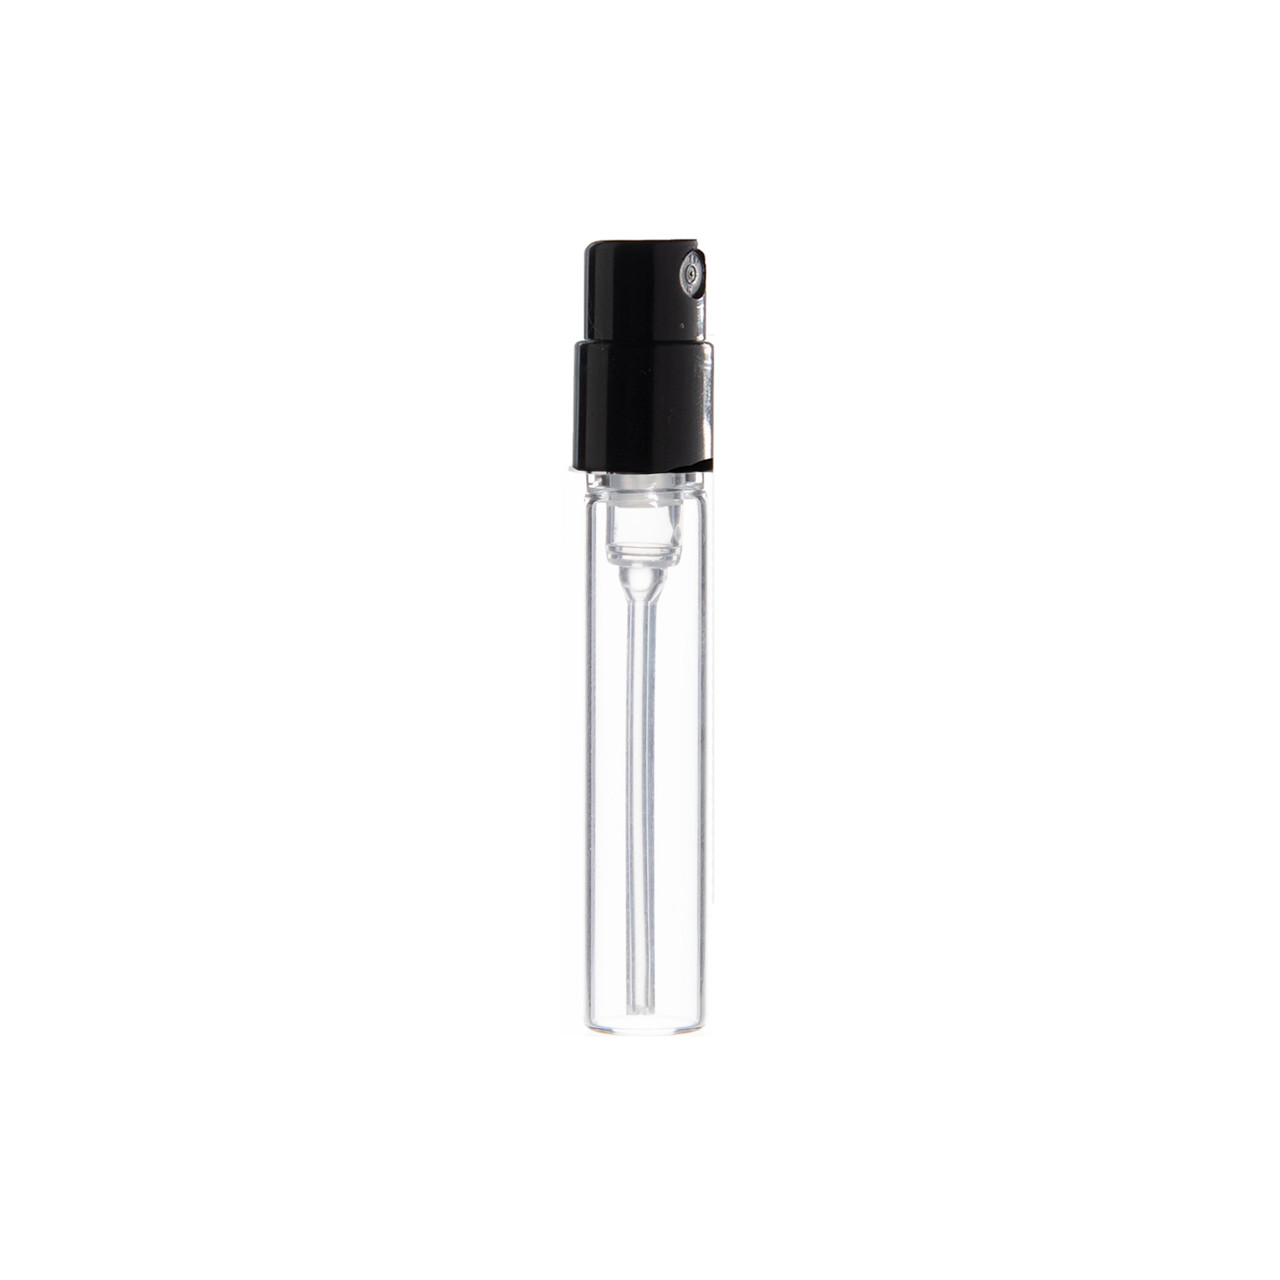 Perfume Sampler Vial (9 x 47 mm) Includes Fine Mist Sprayer